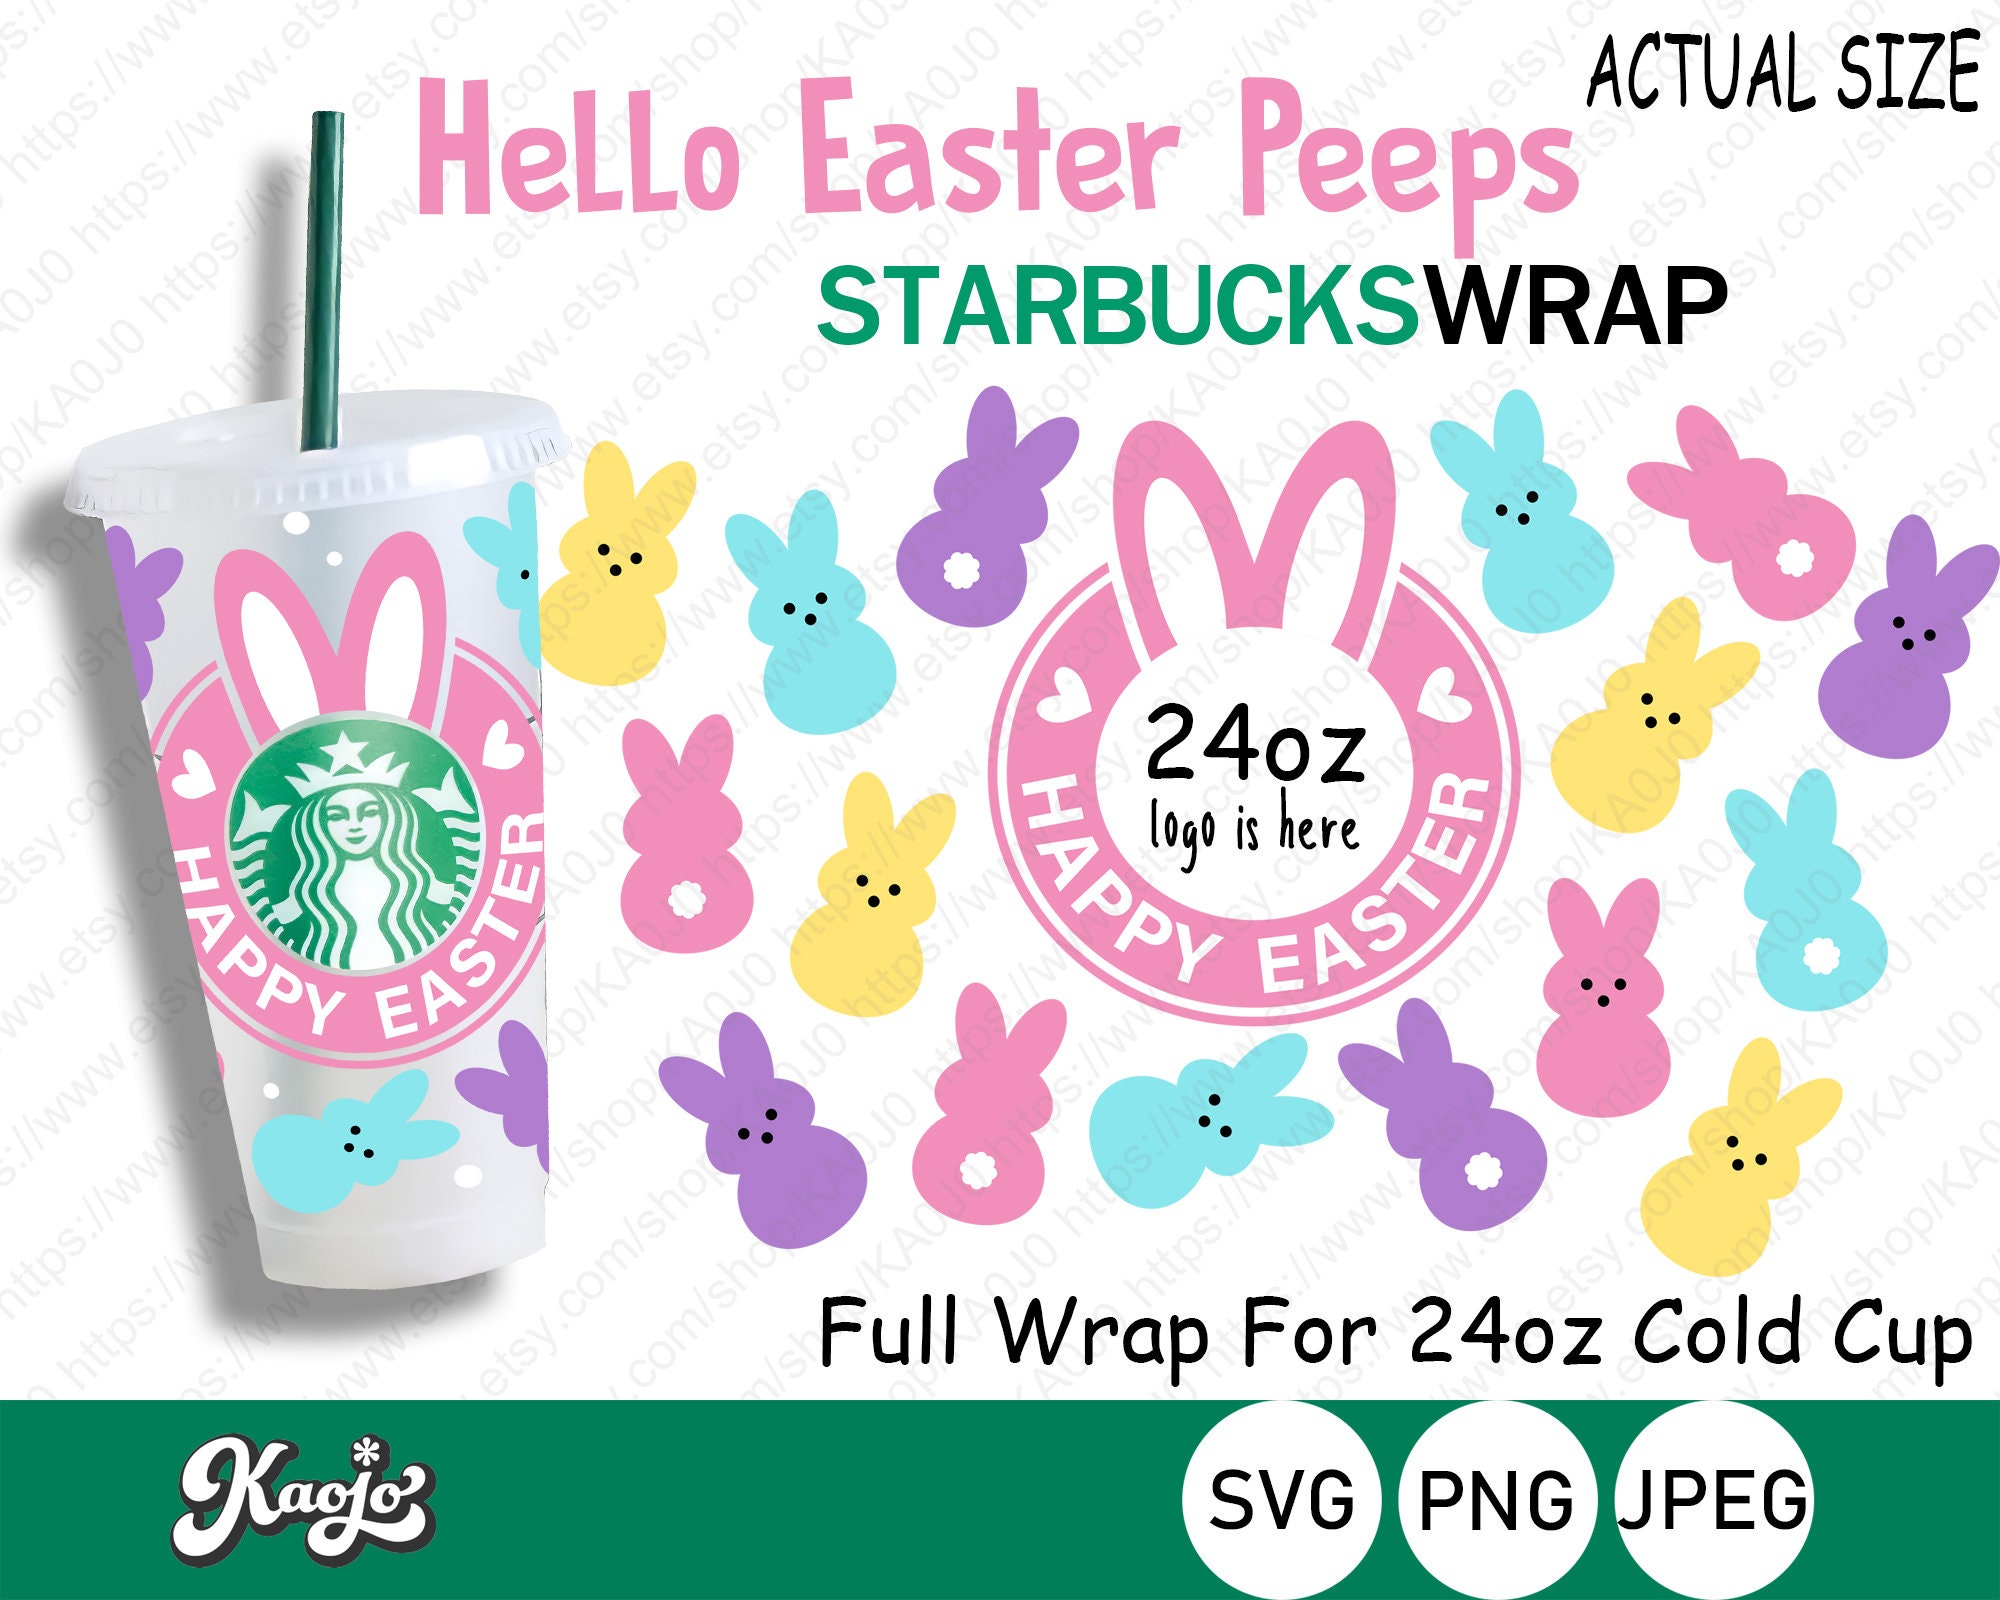 Happy Easter Starbucks Cup SVG Full Wrap Easter Rabbit Peeps | Etsy